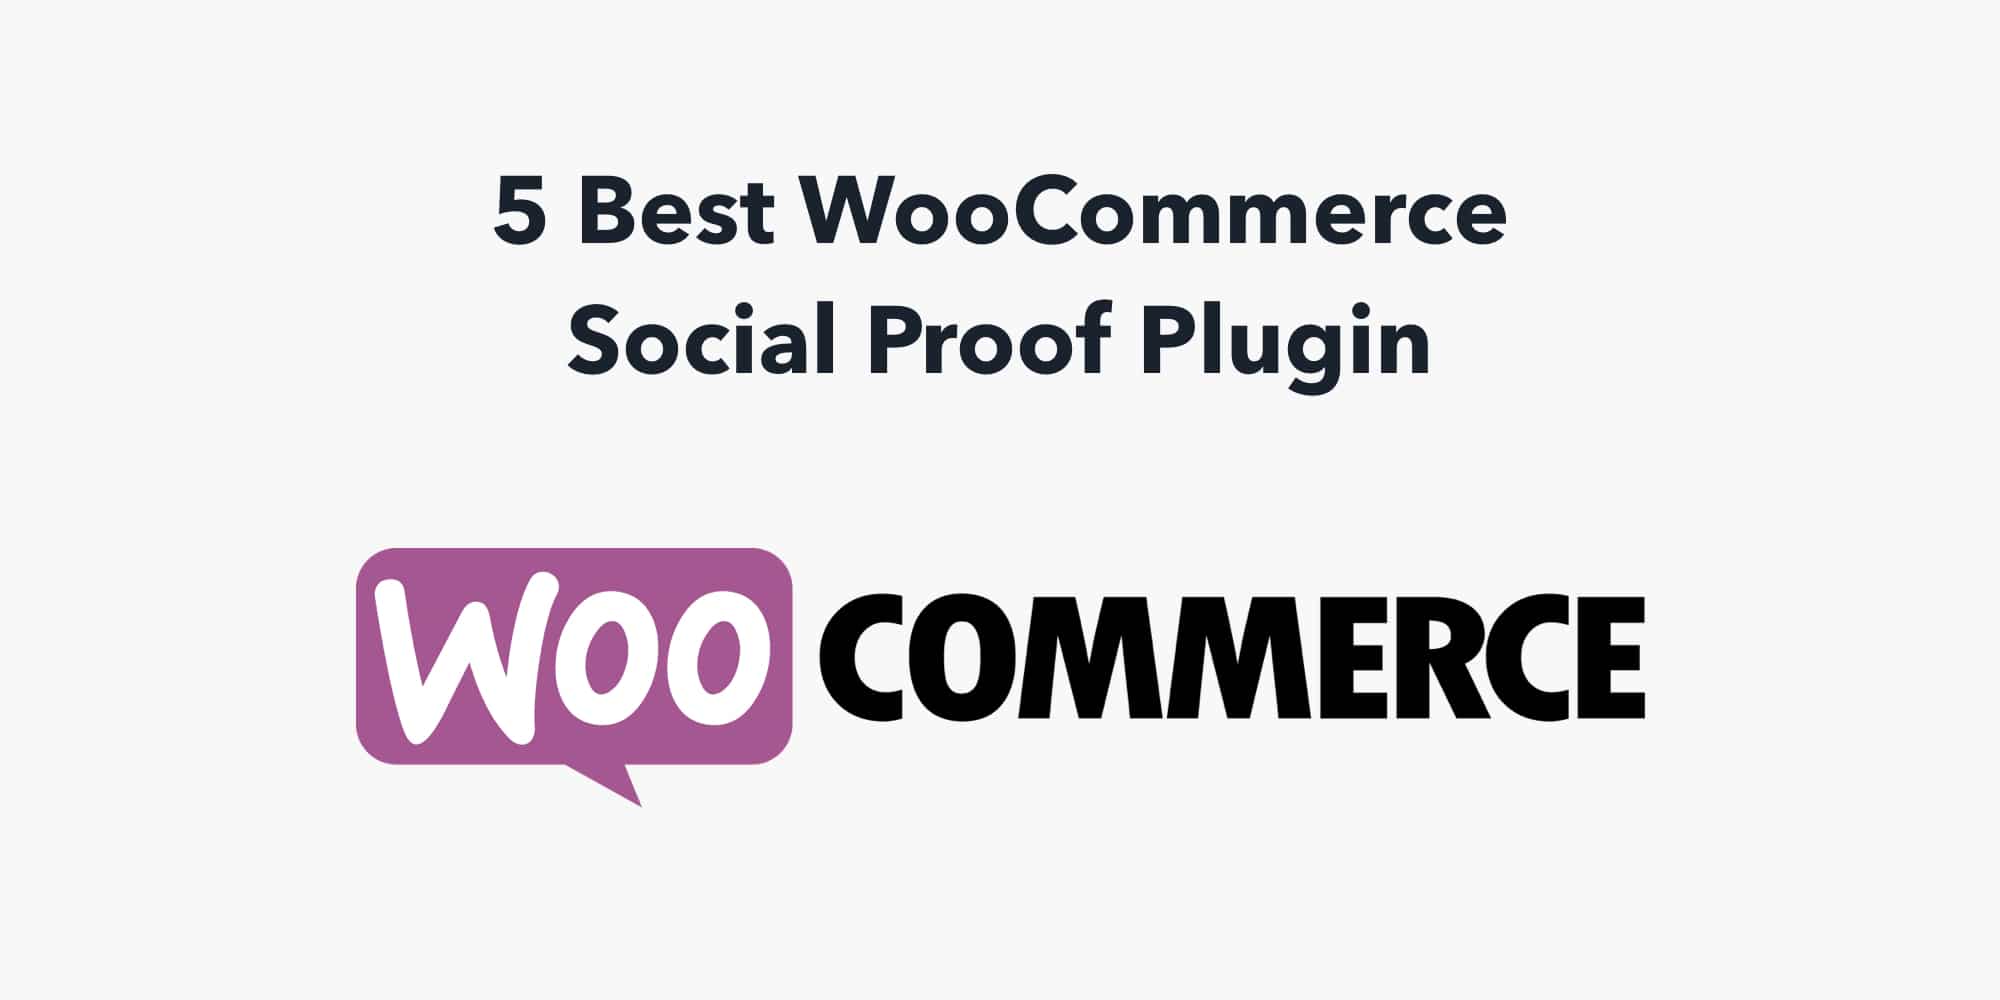 5 Best WooCommerce Social Proof Plugin in 2022